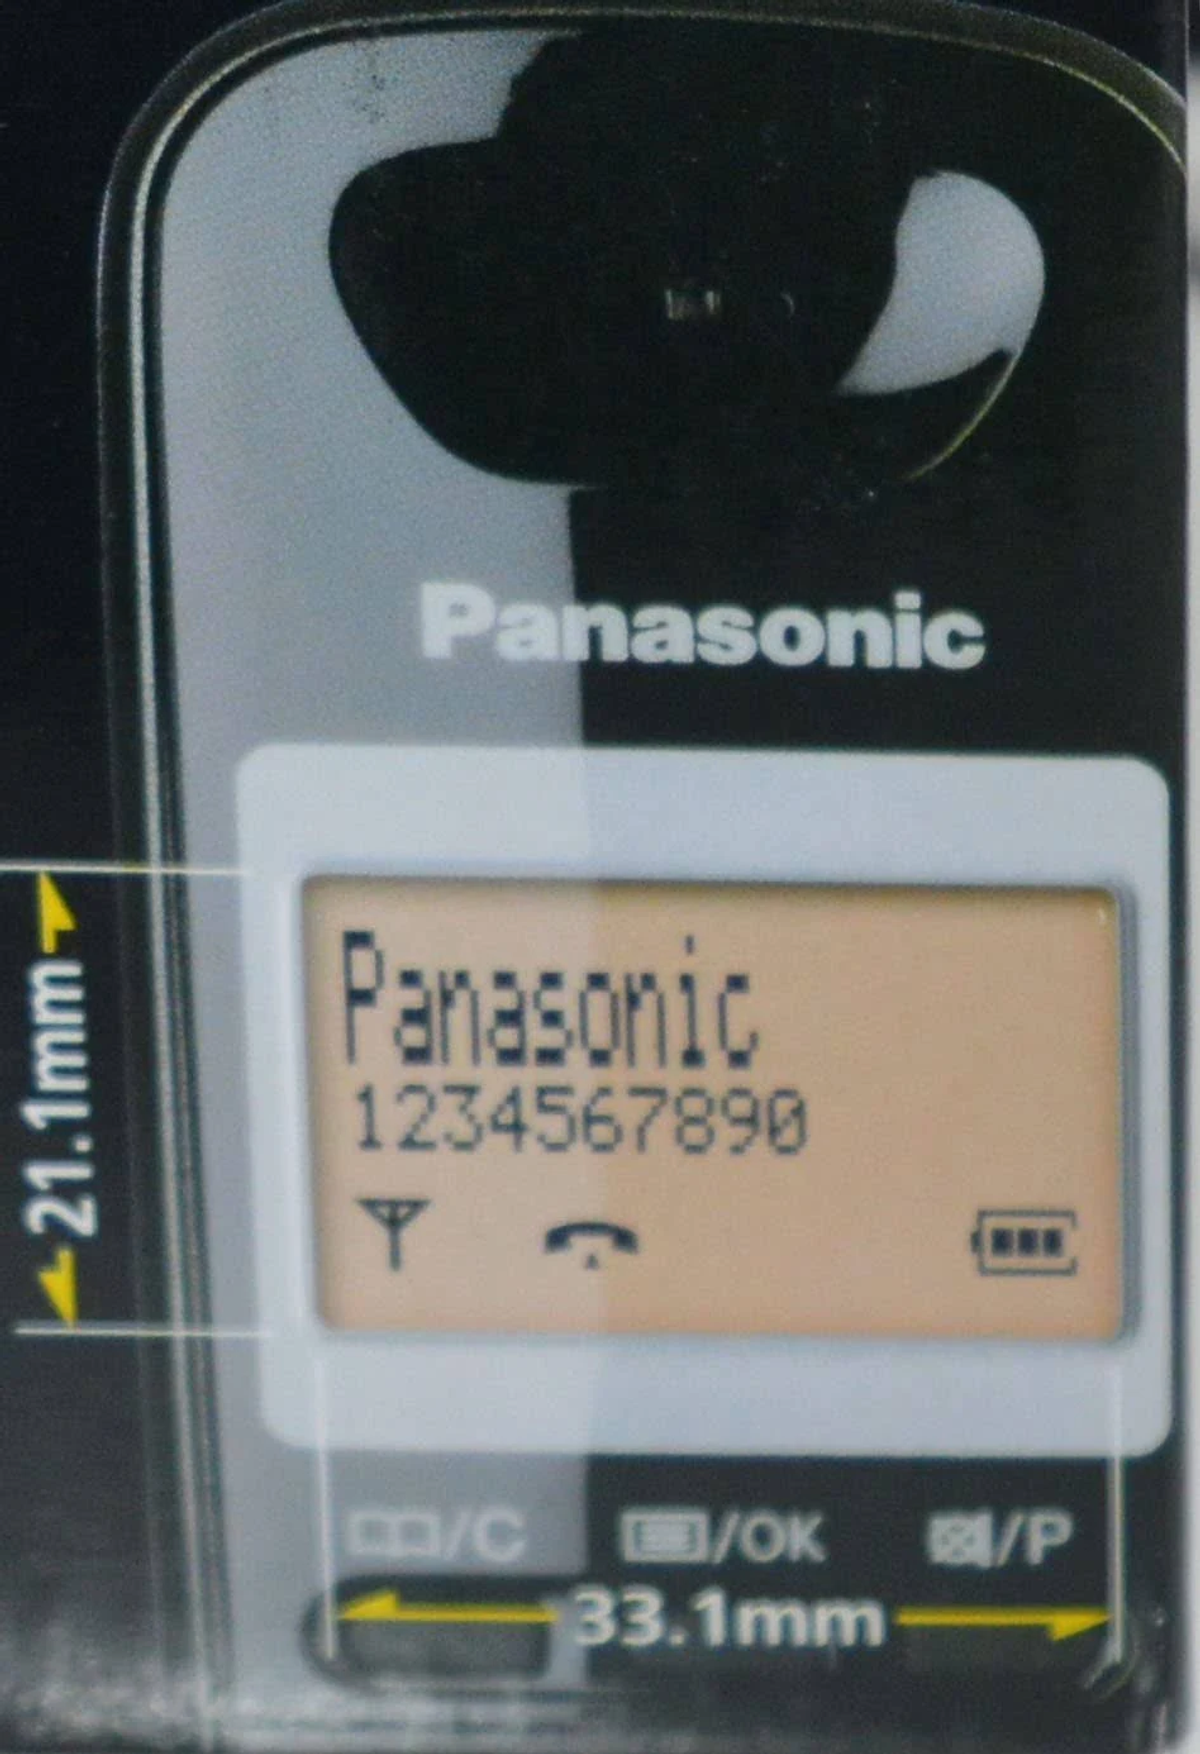 KX-TG2511FX PANASONIC Telefon